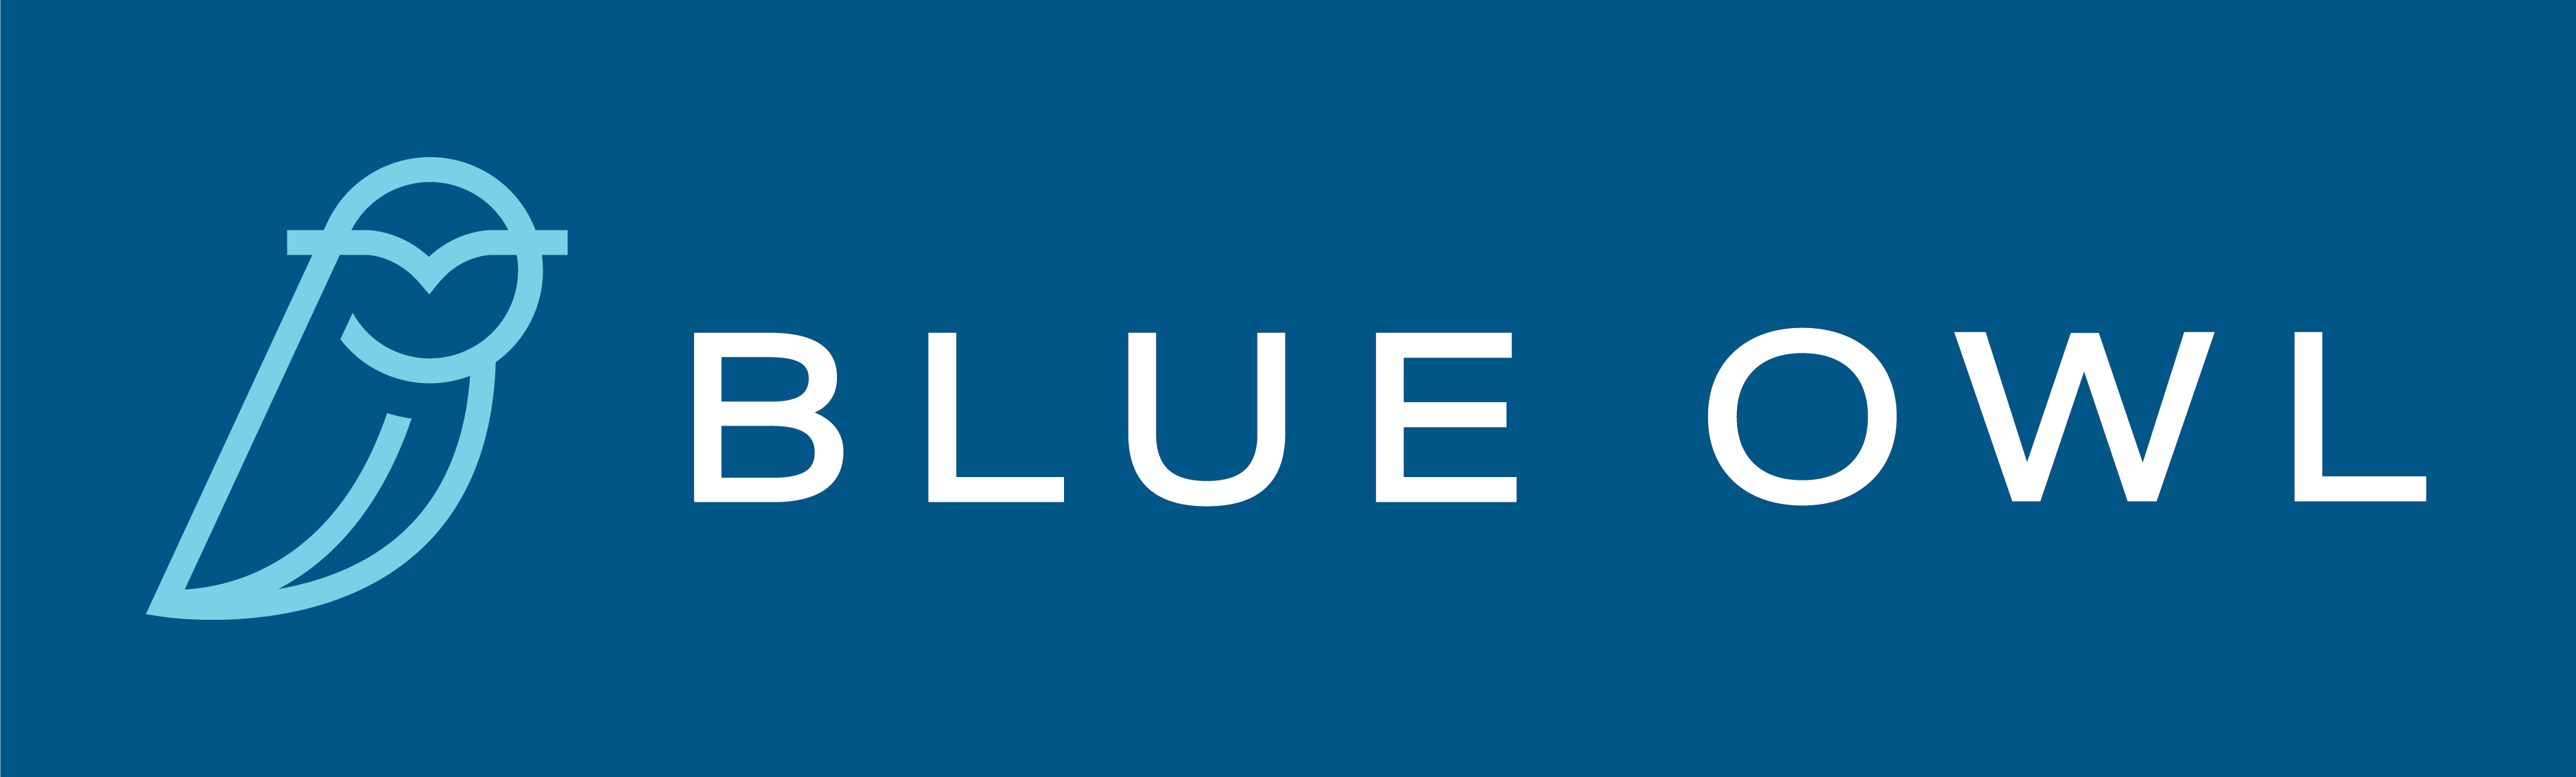 BlueOwlLogo-OnBlue-horizontal.png